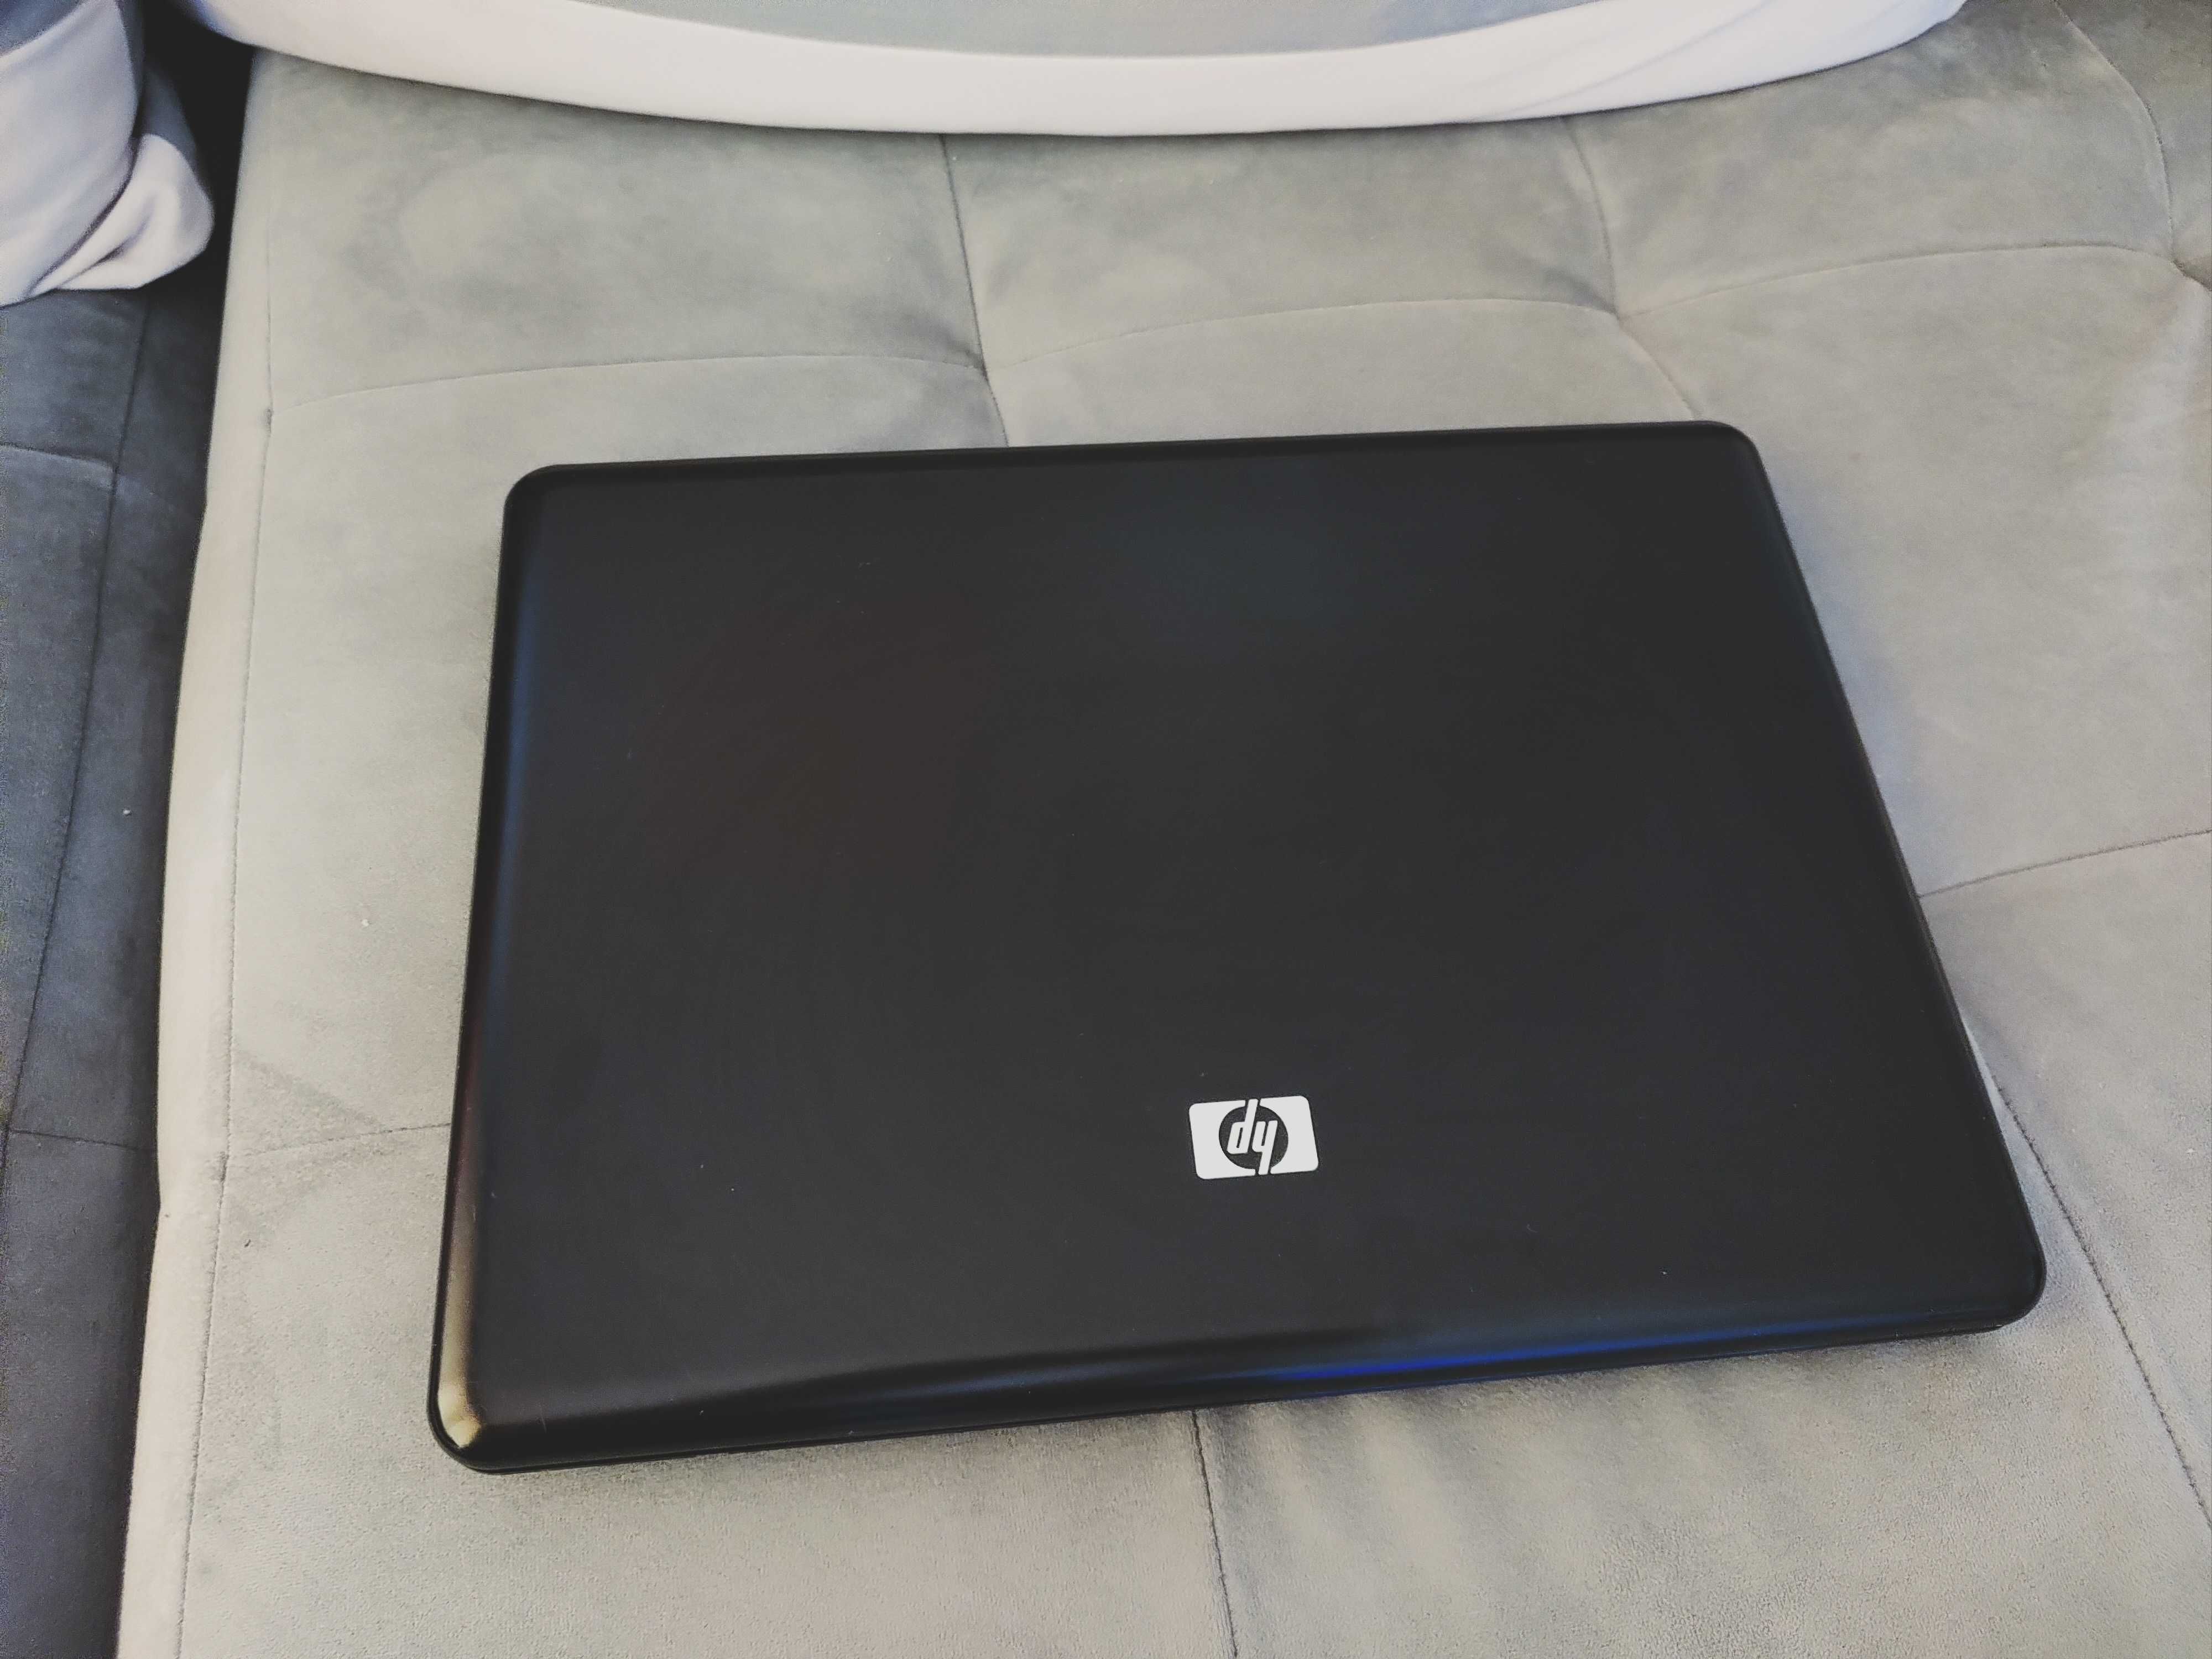 Laptop HP 6730s, напълно работещ